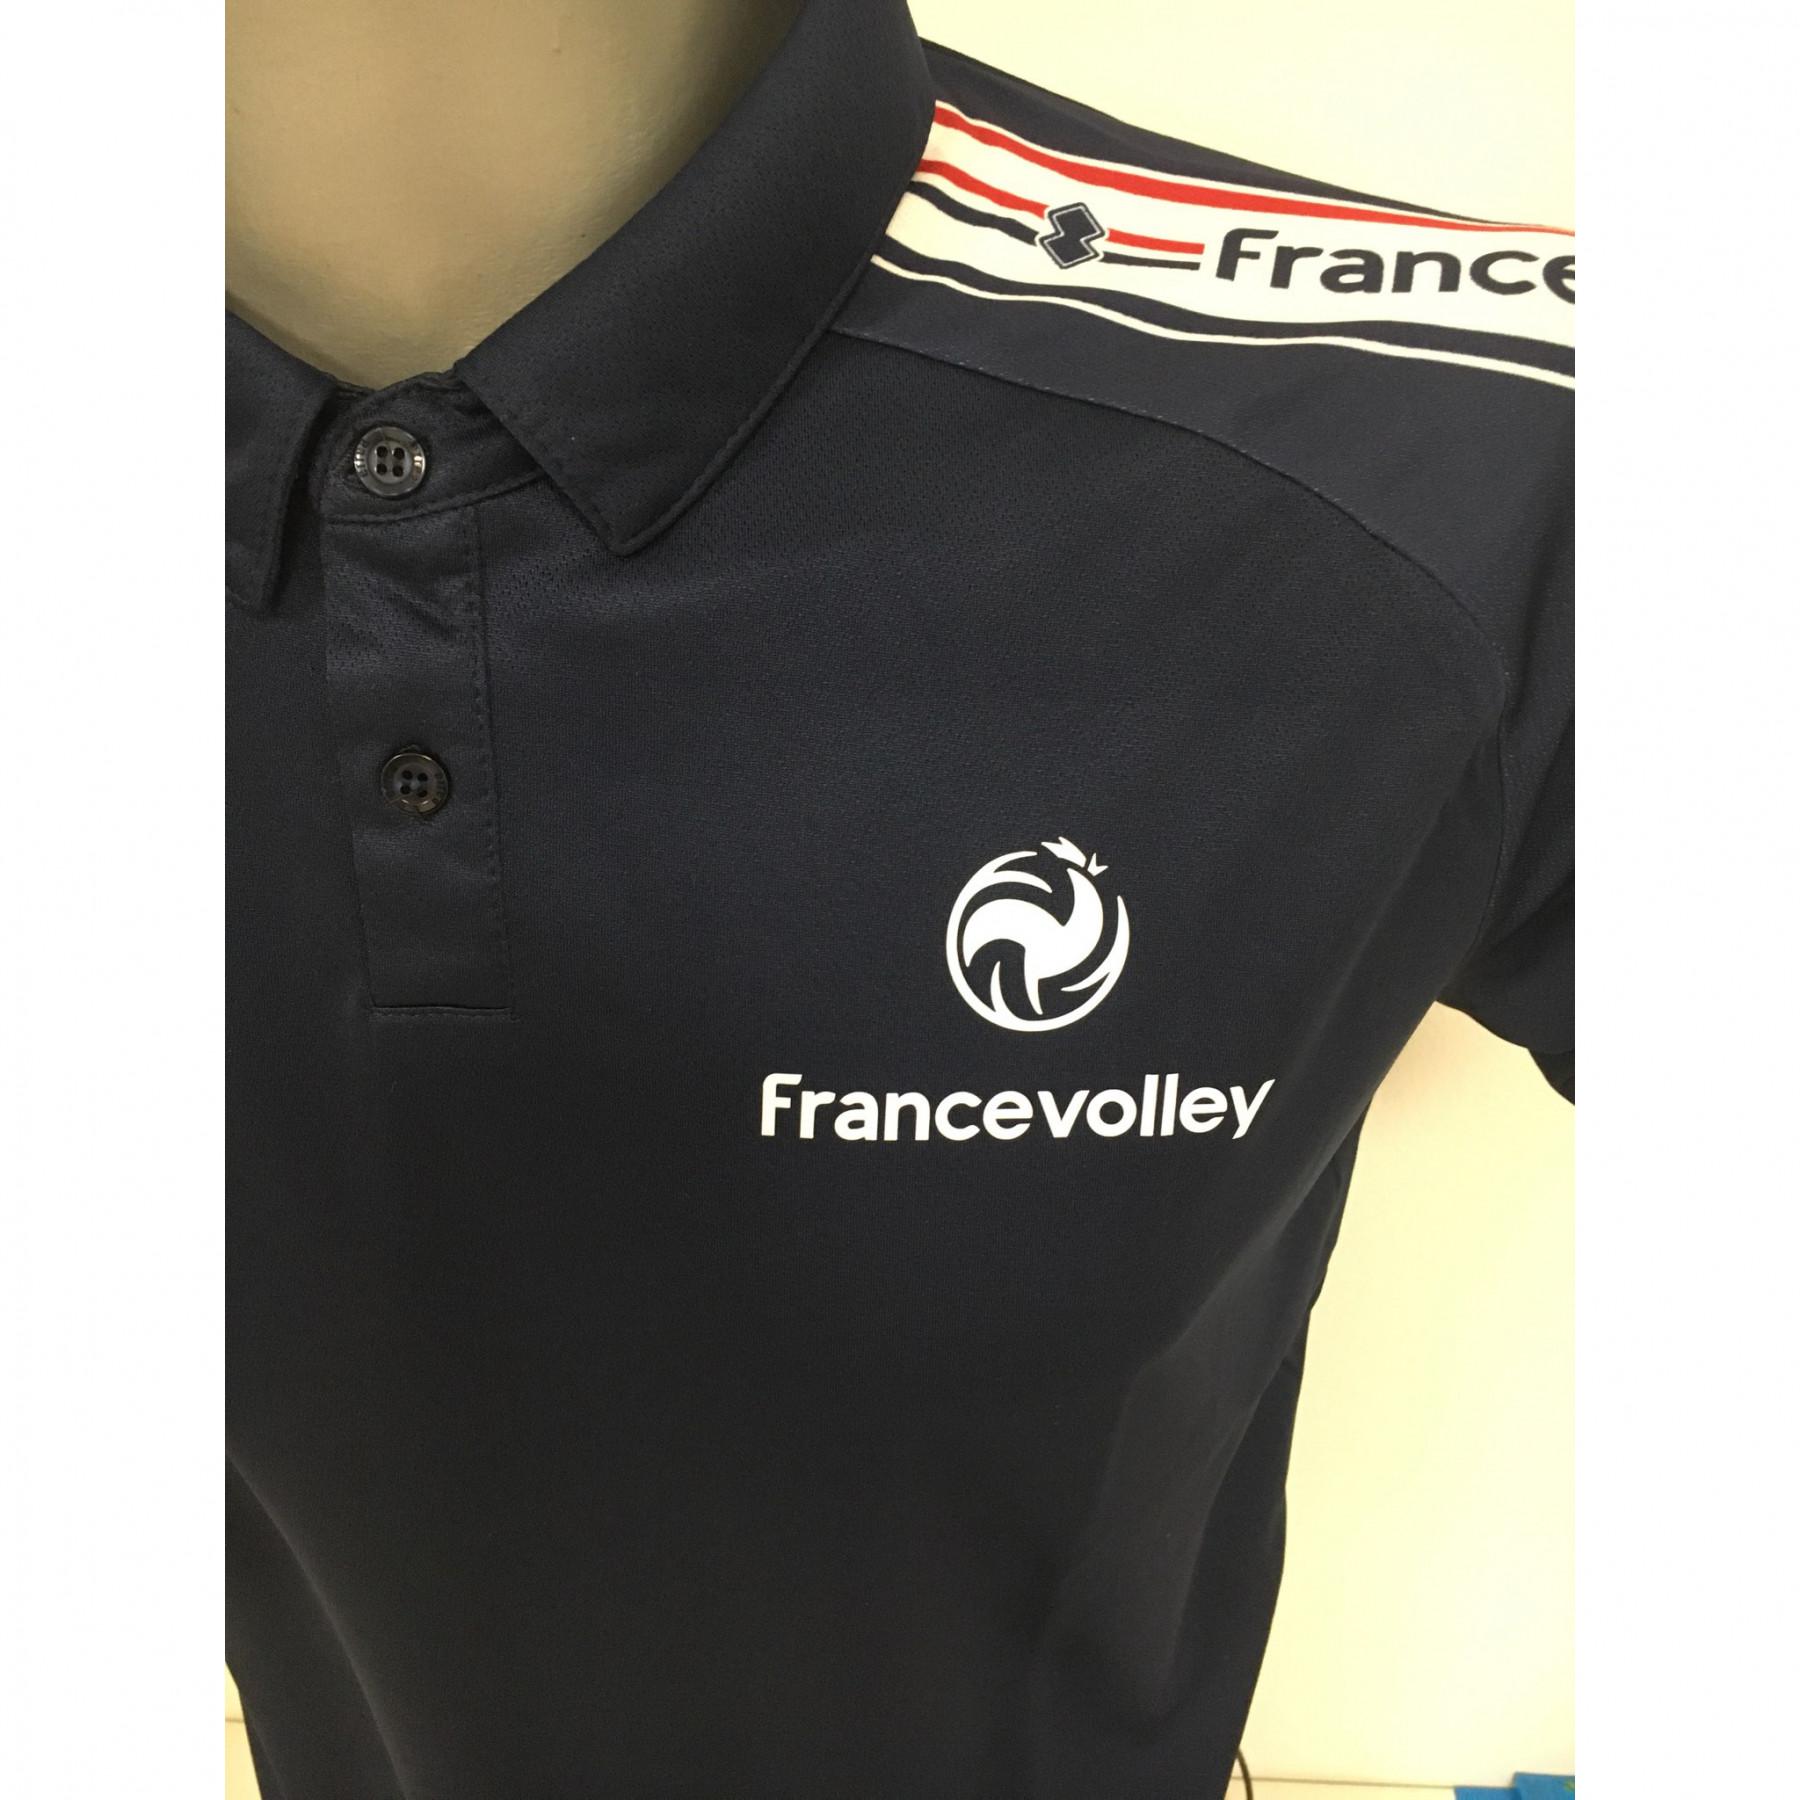 Polo shedir squadra di France 2020